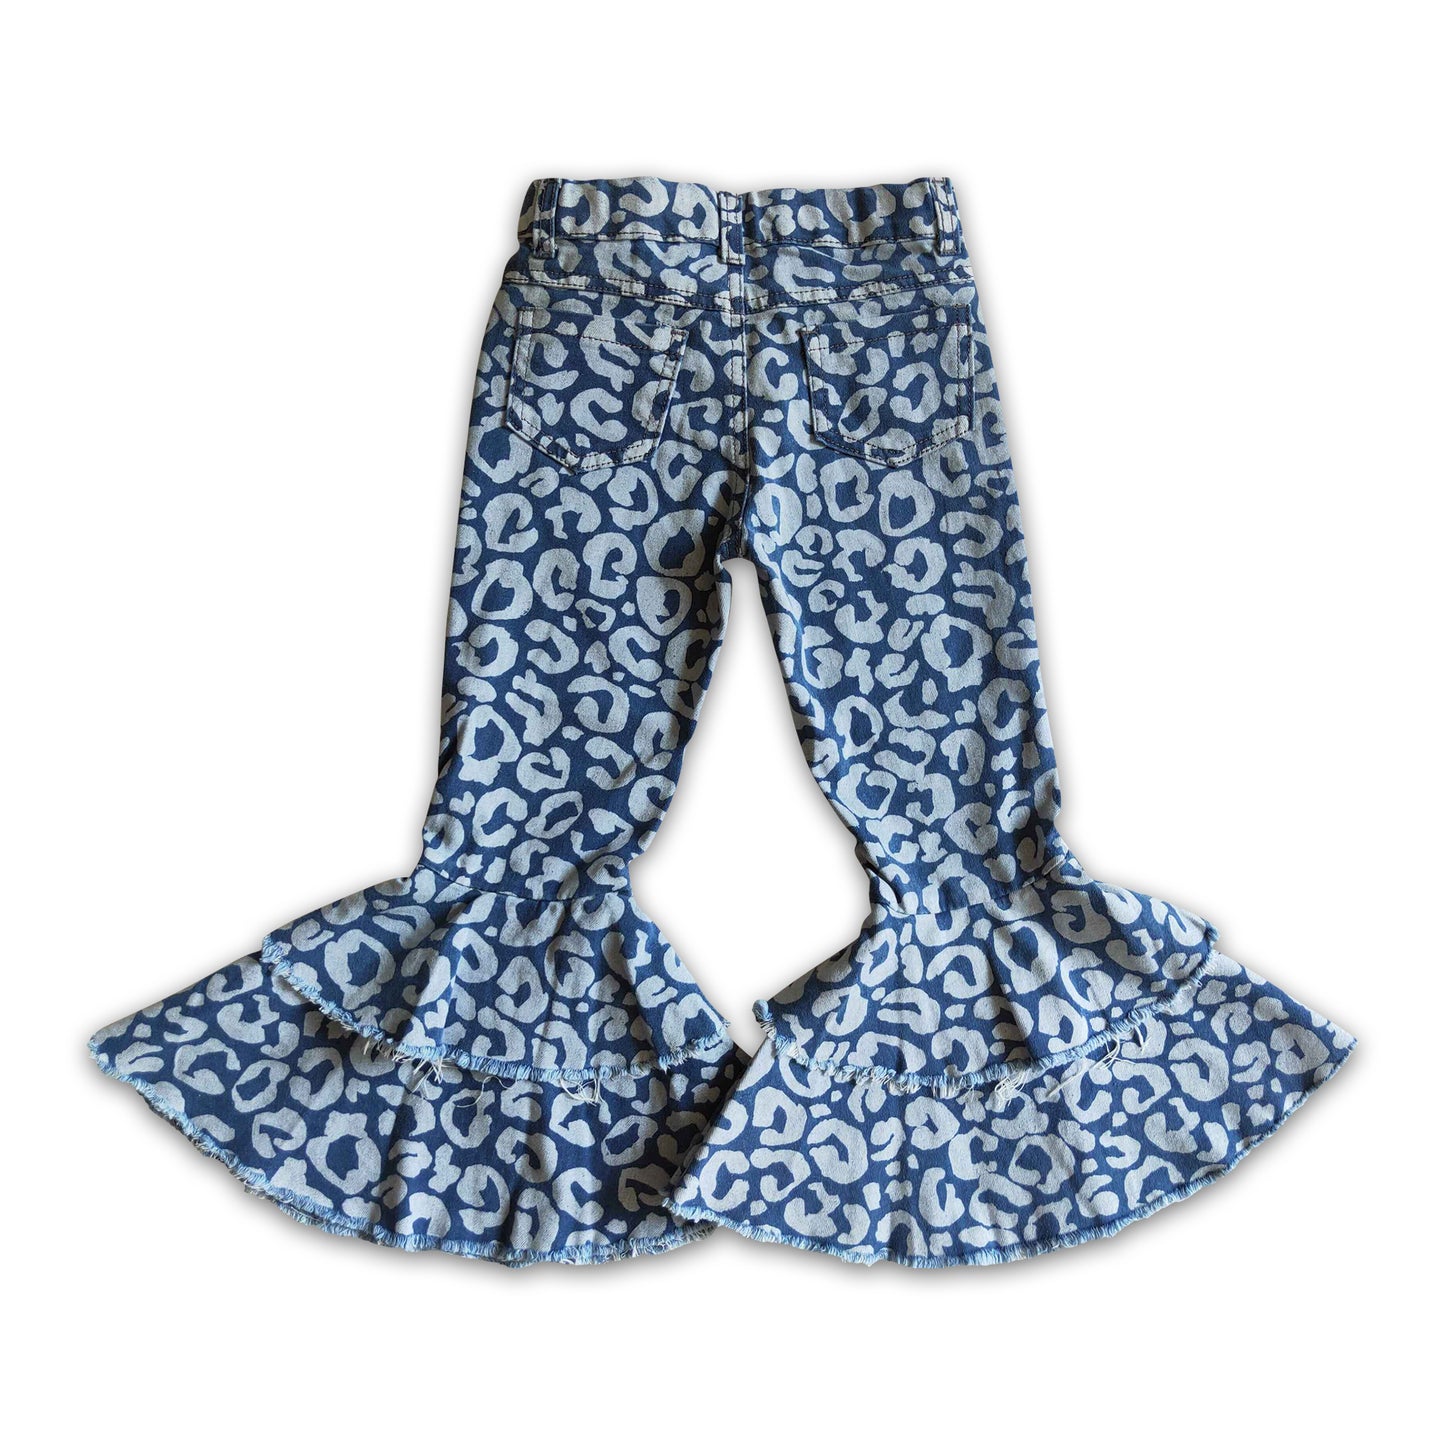 Blue leopard jeans ruffle baby girls bell bottom denim pants